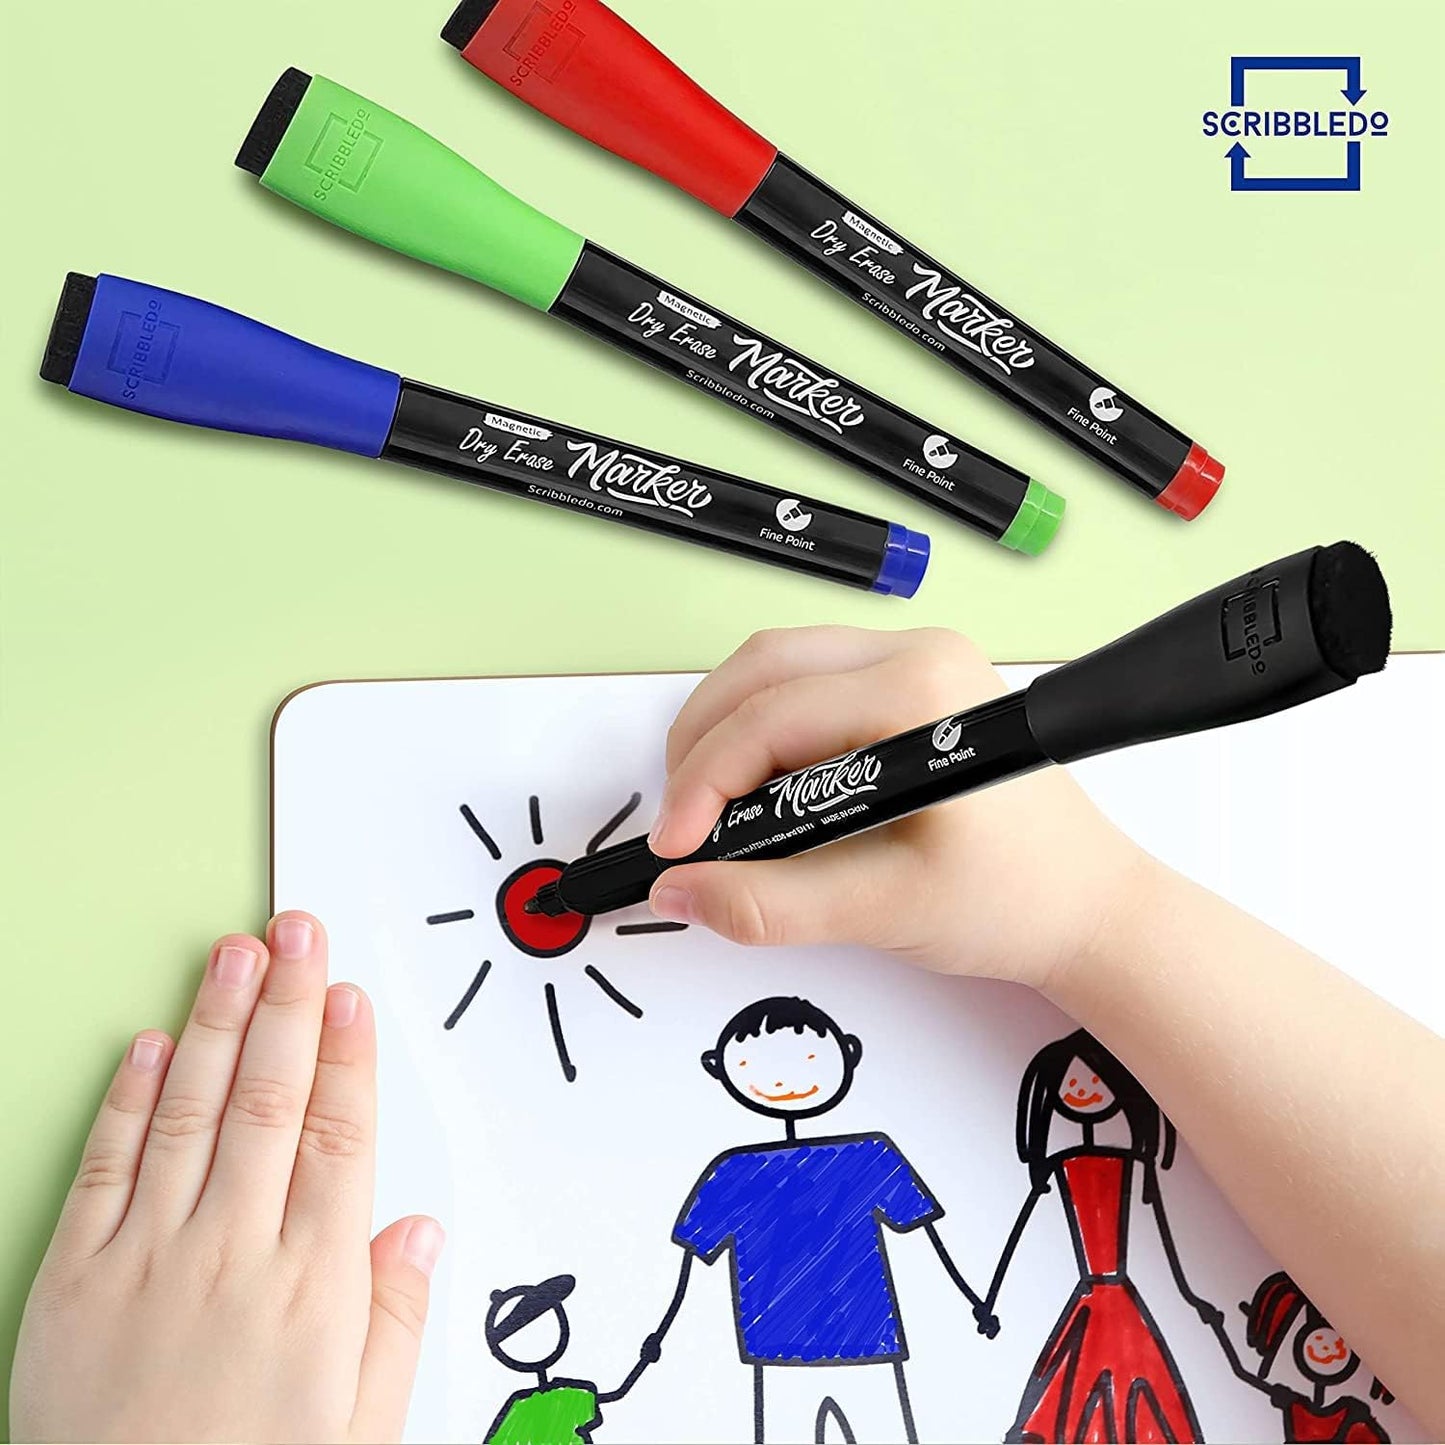 Mag-Fancy Magnetic Dry Erase Marker Set - Fine Point Tip White board  Markers, Build-in Erase, 12 Color, Safe Inks, Low Odor,Wipe Pens for  Teachers